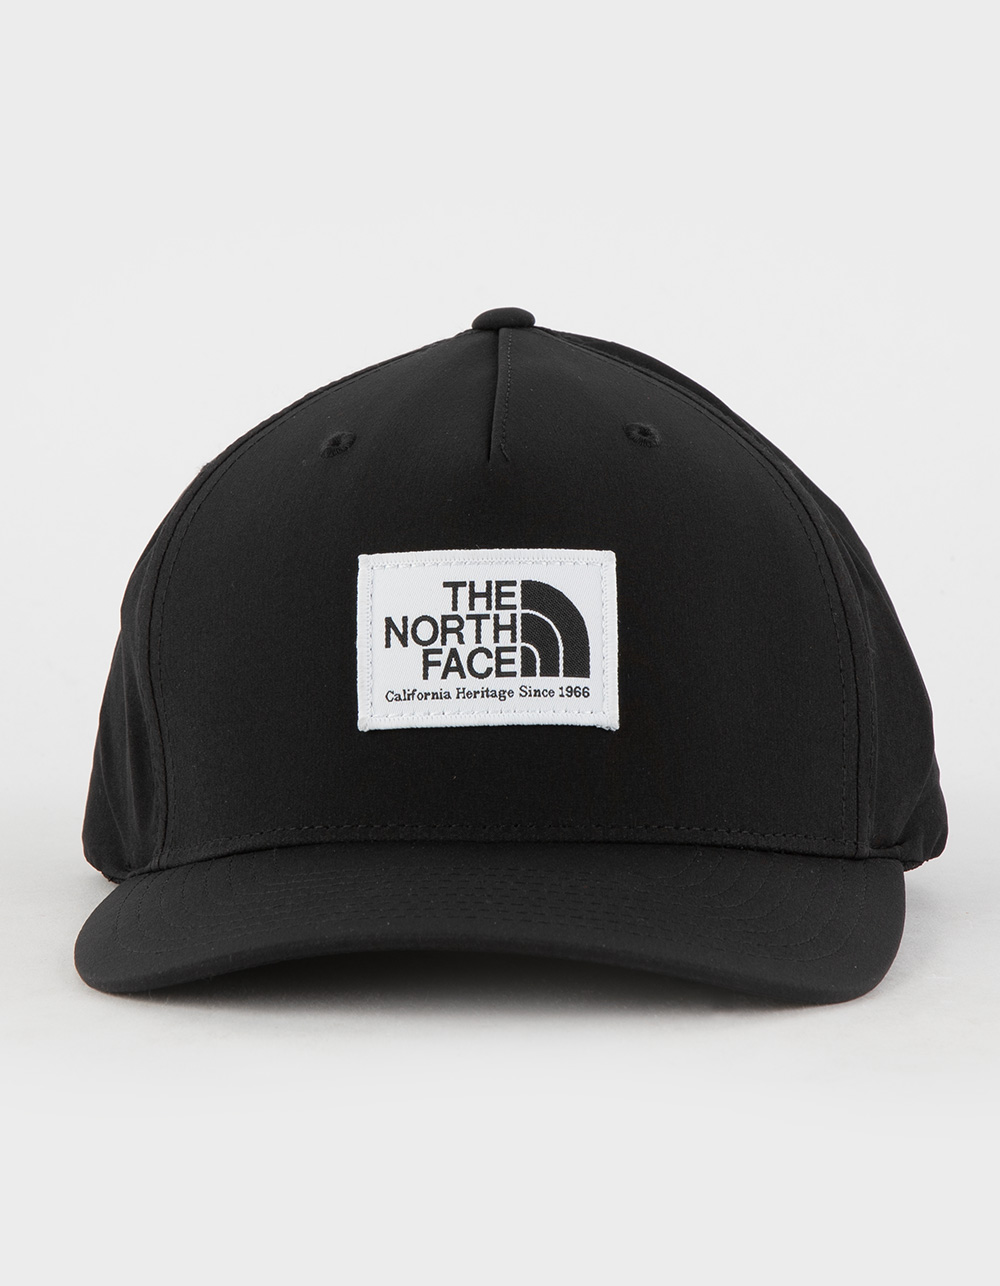 THE NORTH FACE Keep It Tech Flexfit Strapback Hat - BLACK | Tillys